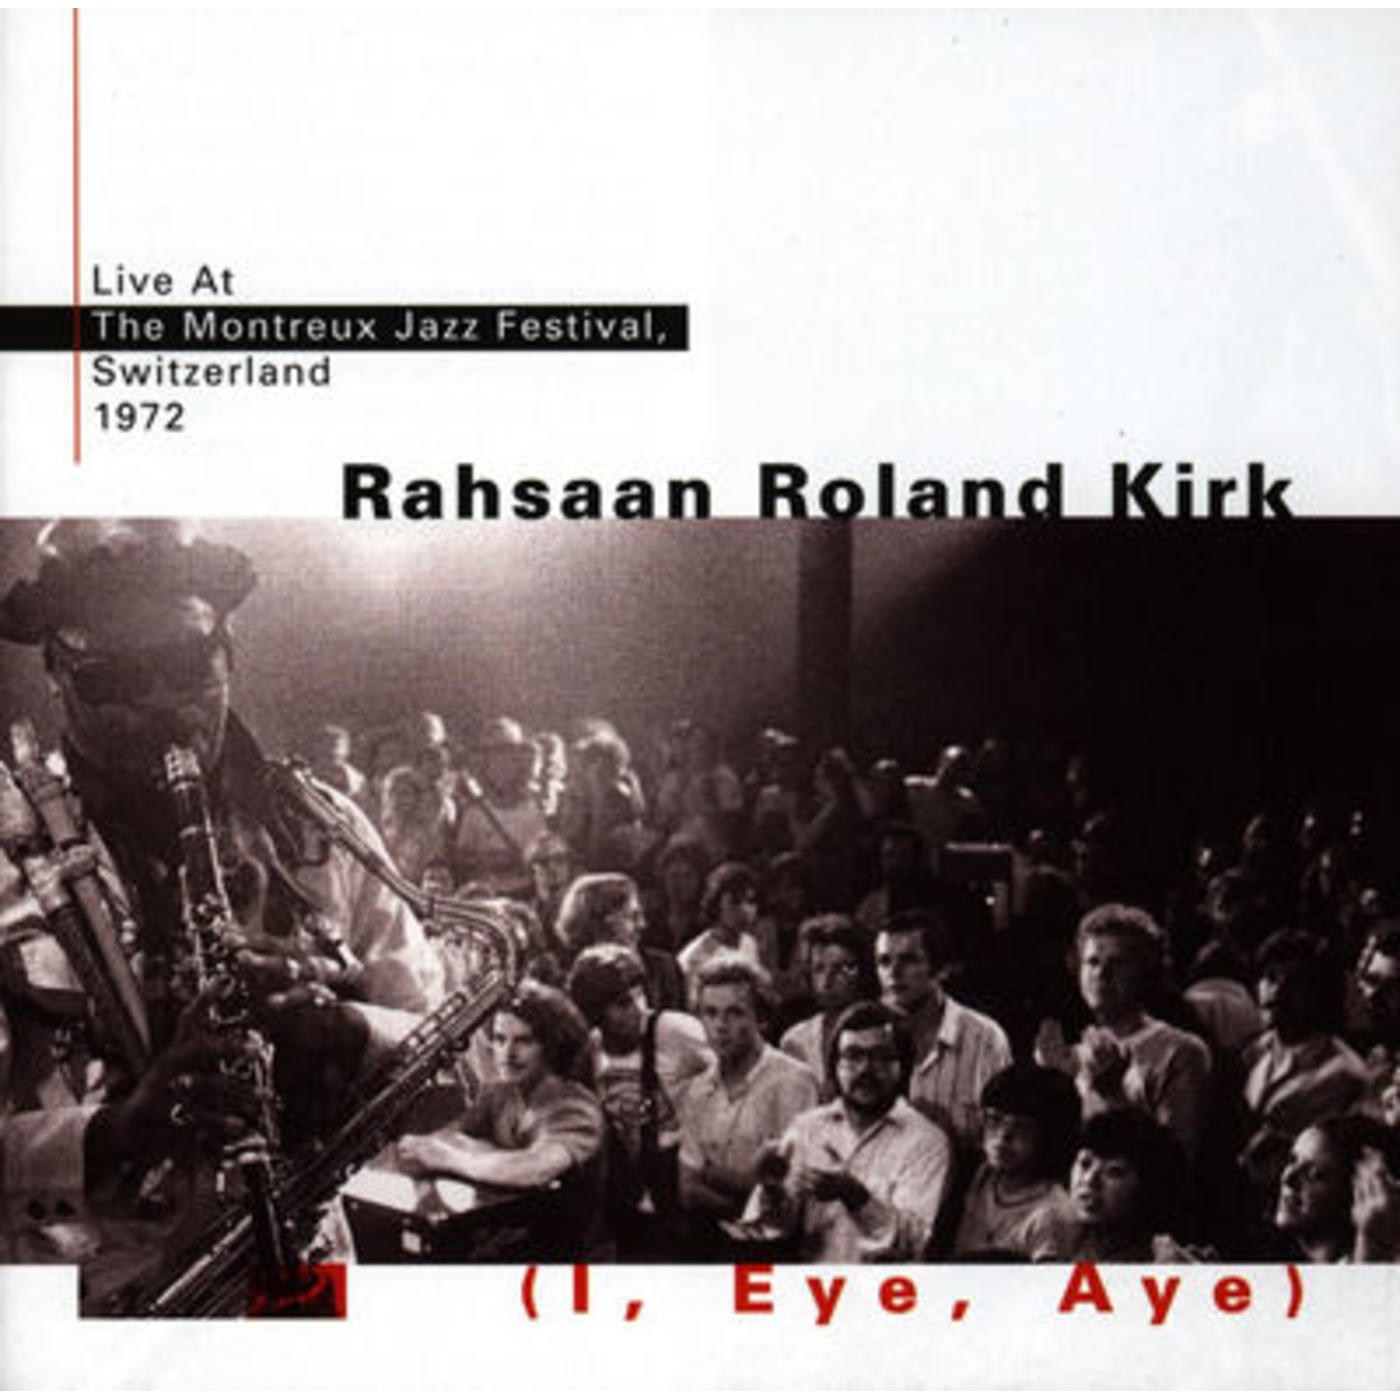 I, Eye, Aye: Live At The Montreux Jazz Festival, 1972